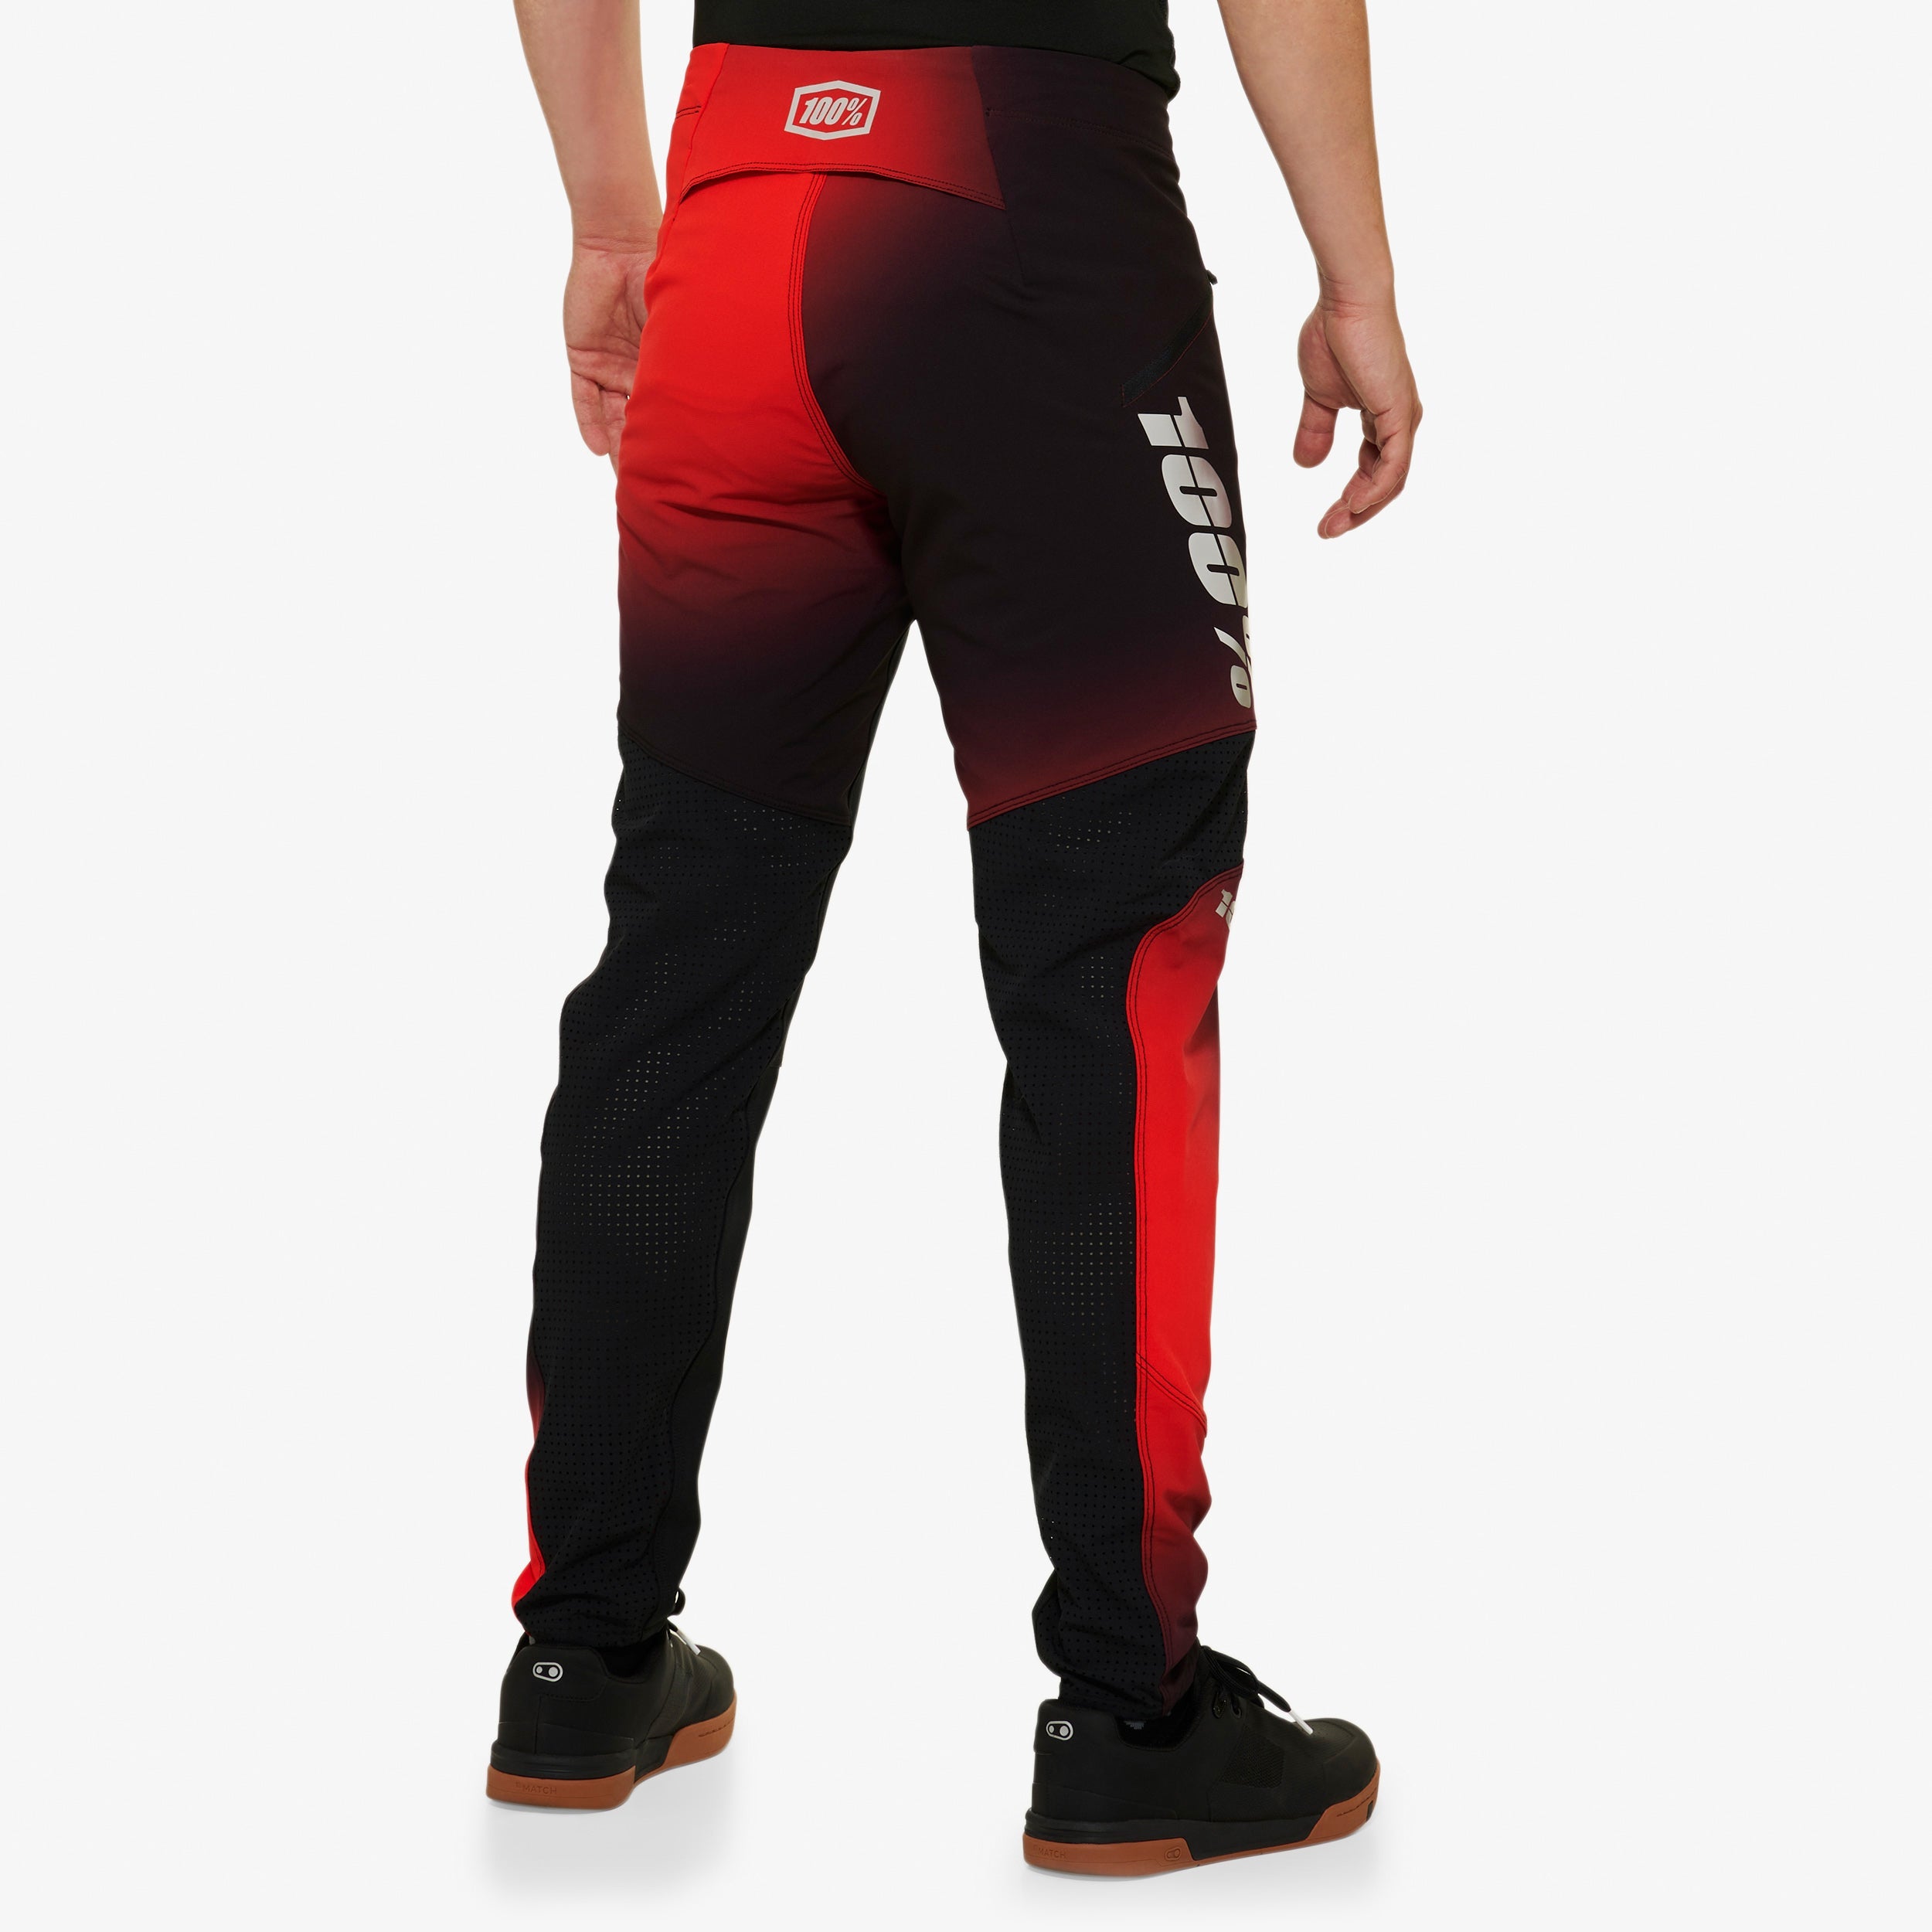 R-CORE X LE Pants Black/Red - Secondary